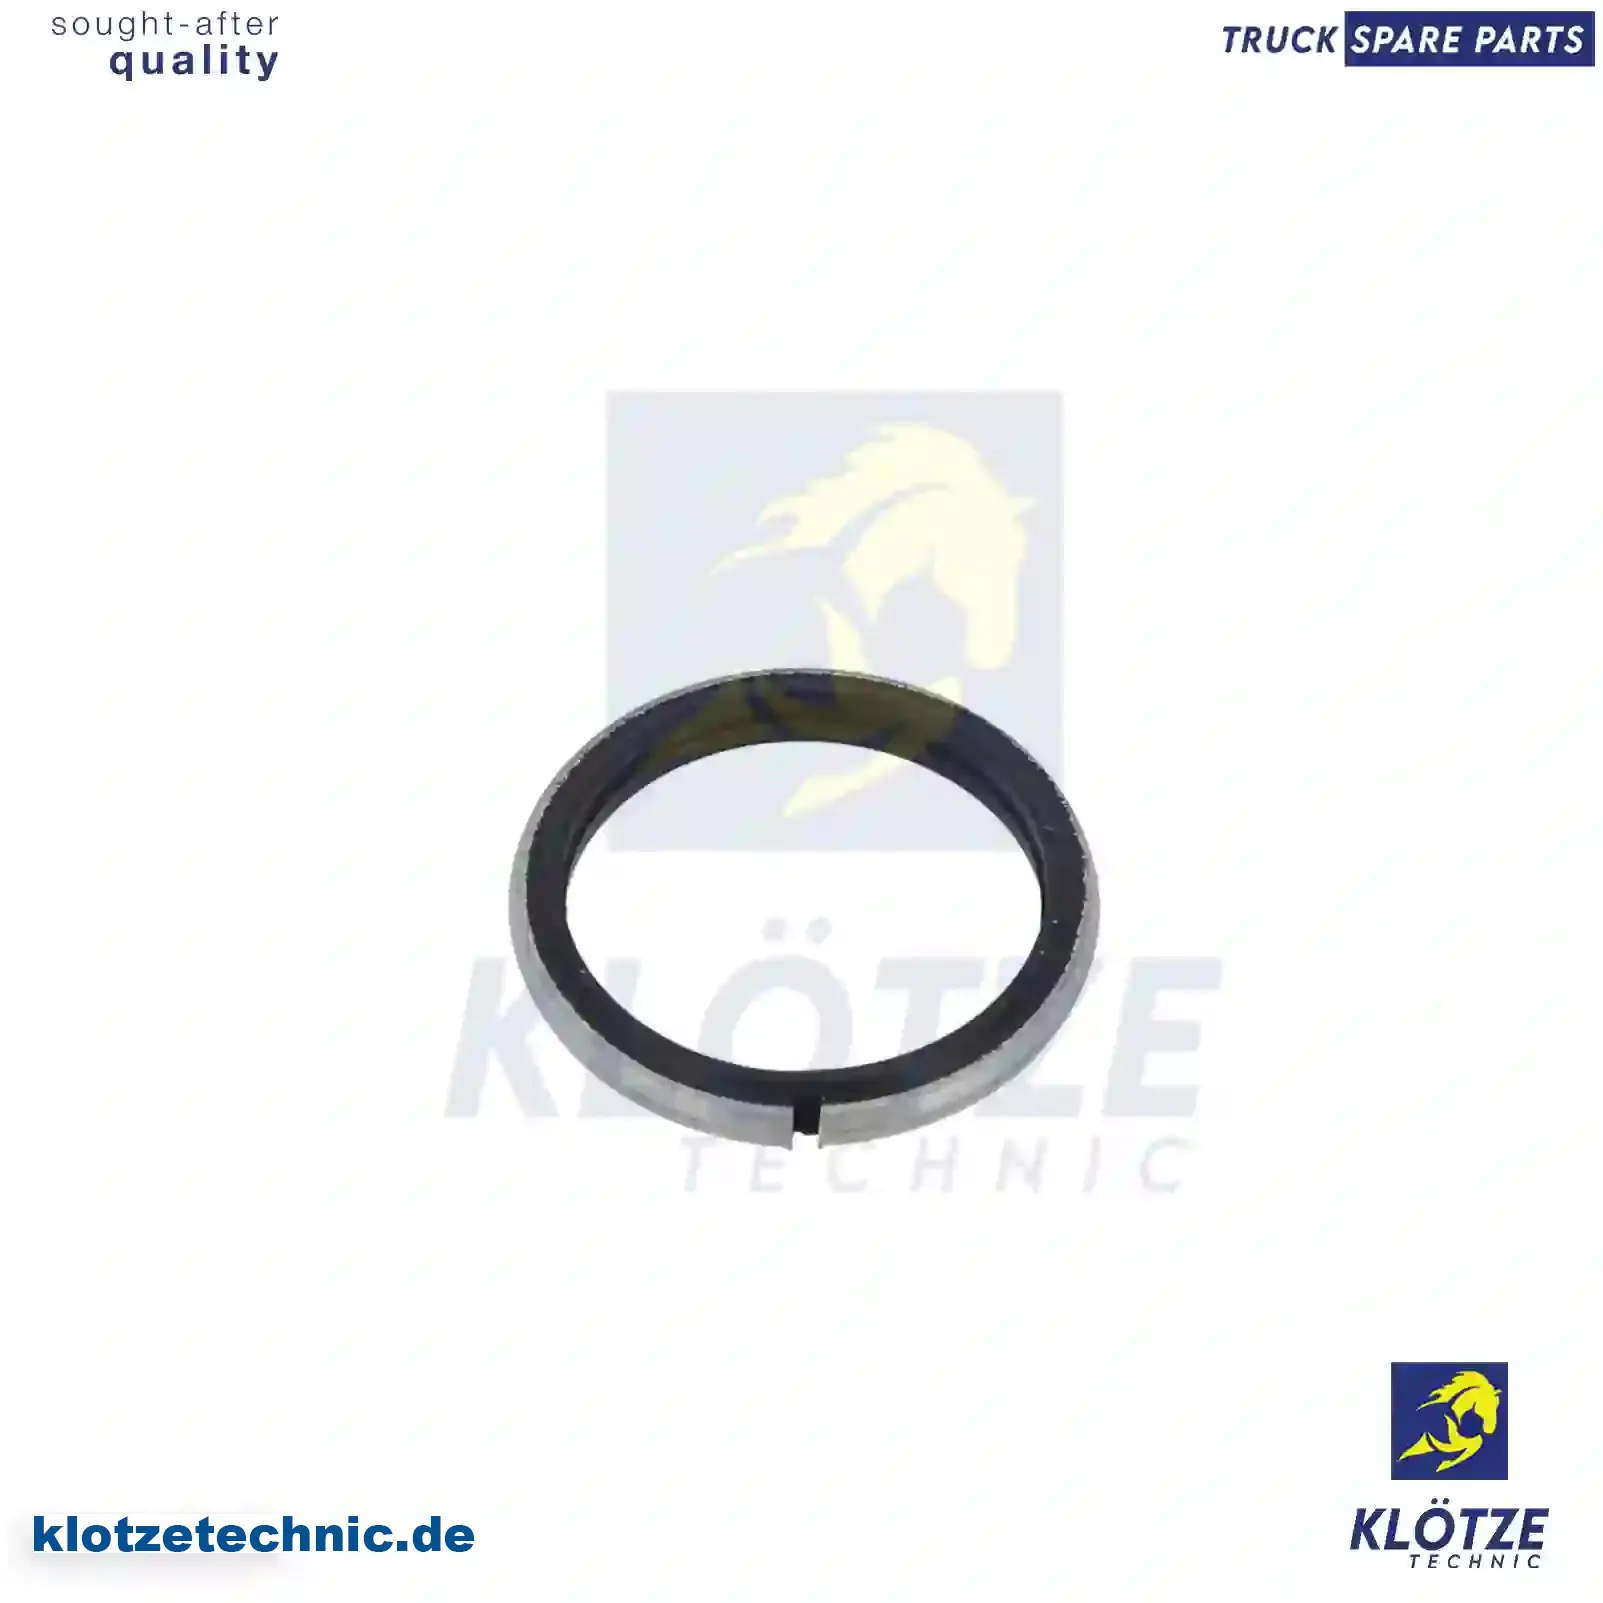 Seal ring, oil filter housing, 8192189, , || Klötze Technic